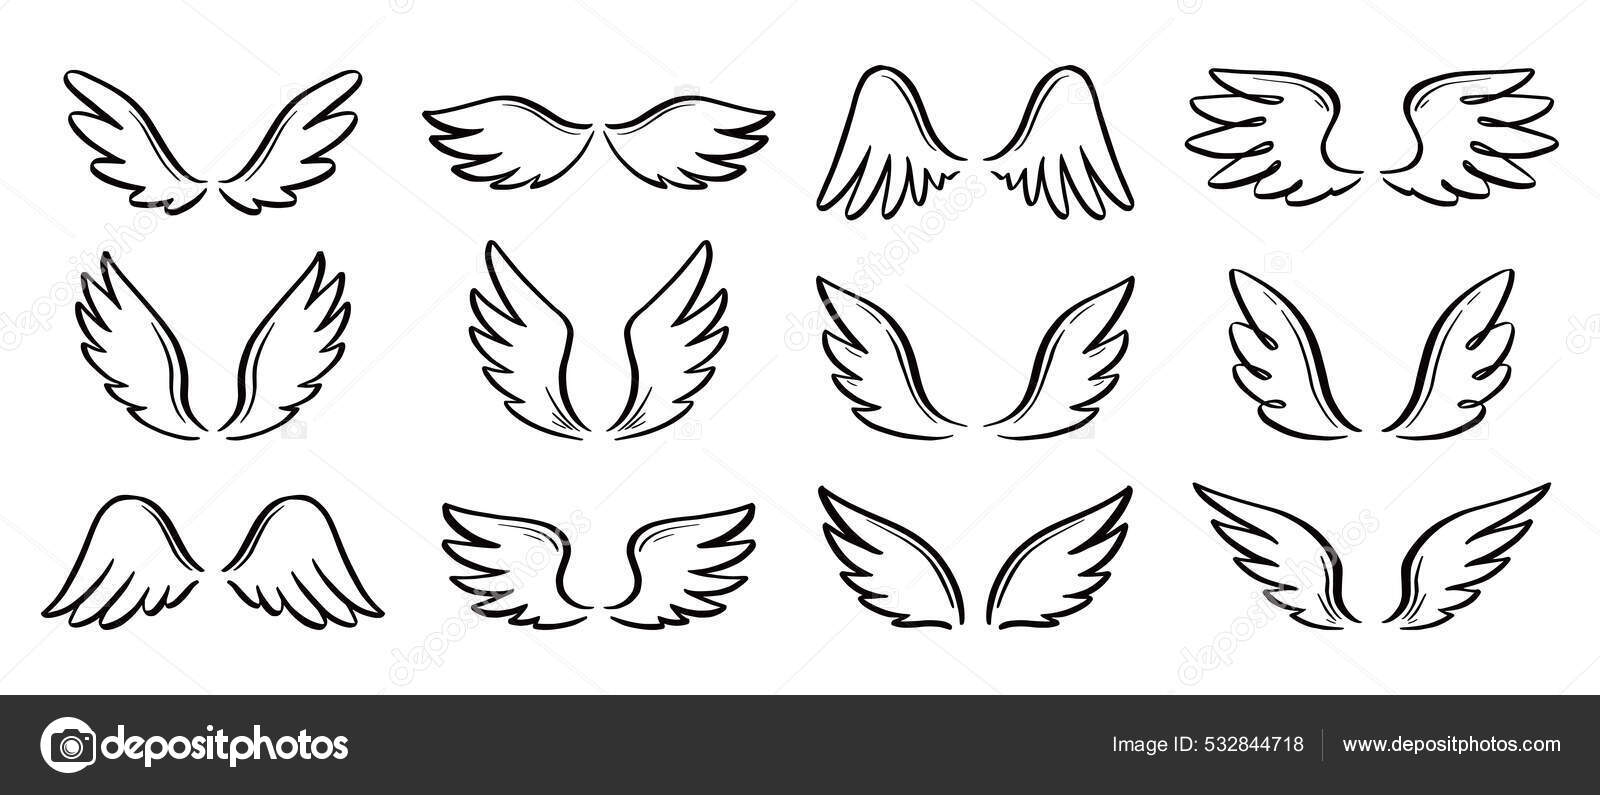 https://st.depositphotos.com/28072470/53284/v/1600/depositphotos_532844718-stock-illustration-angel-doodle-wing-set-hand.jpg